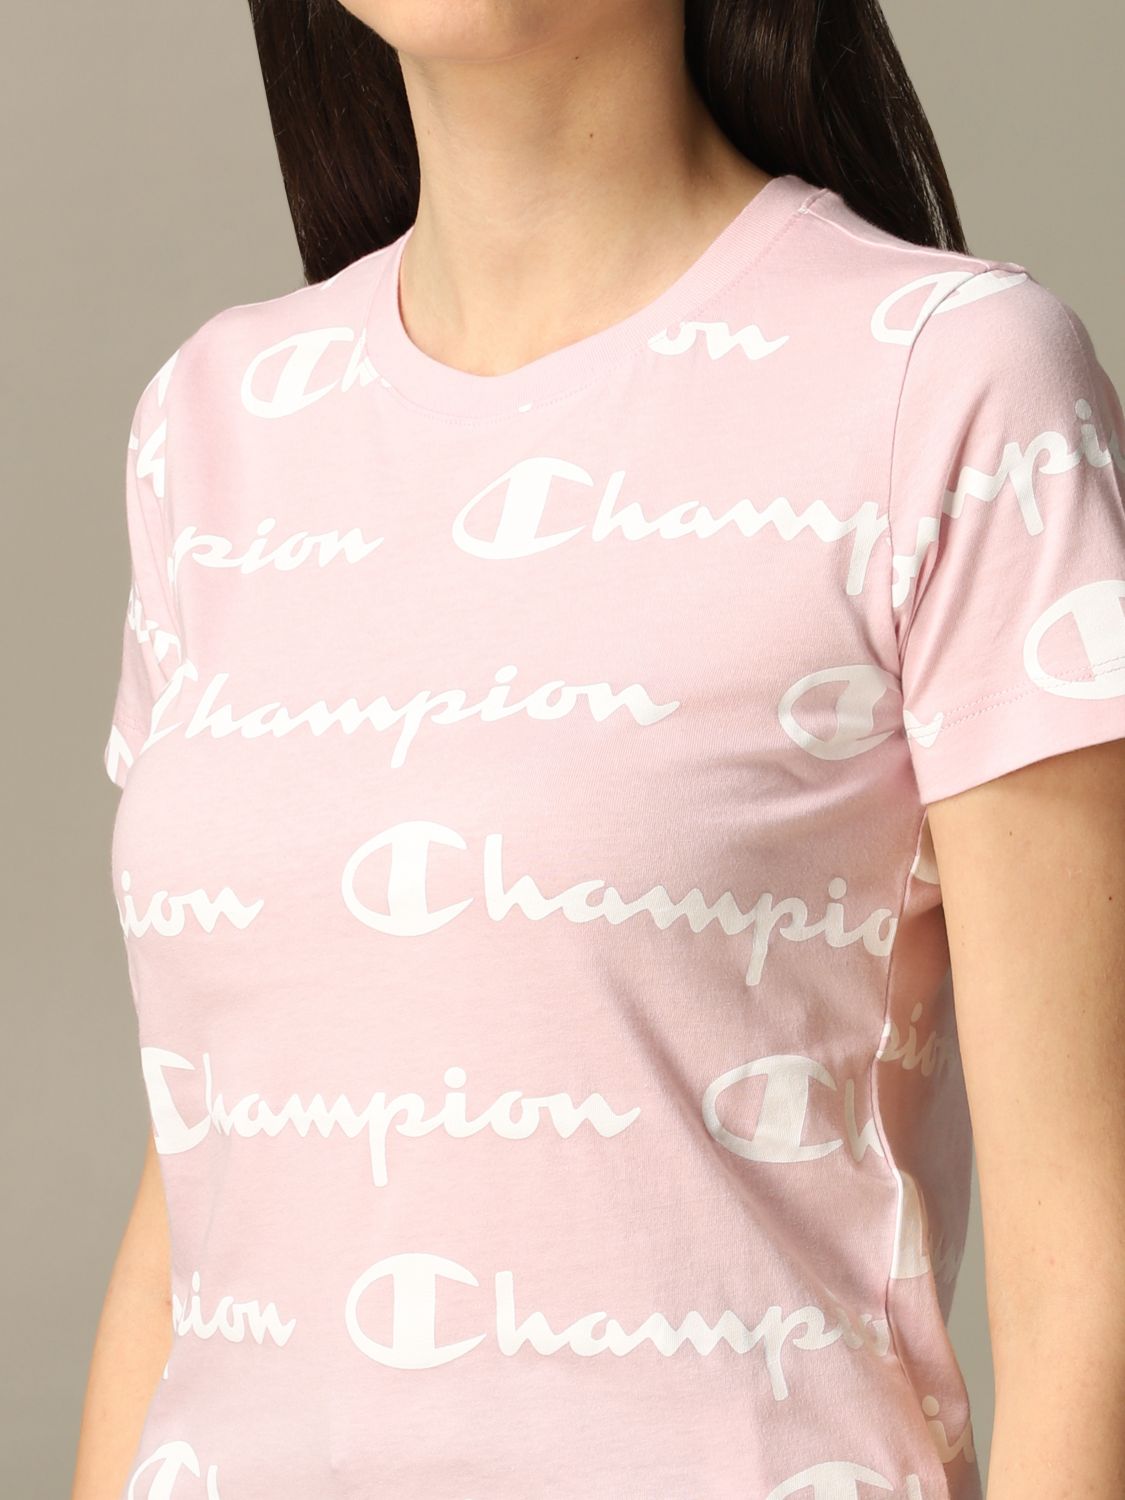 champion tee pink